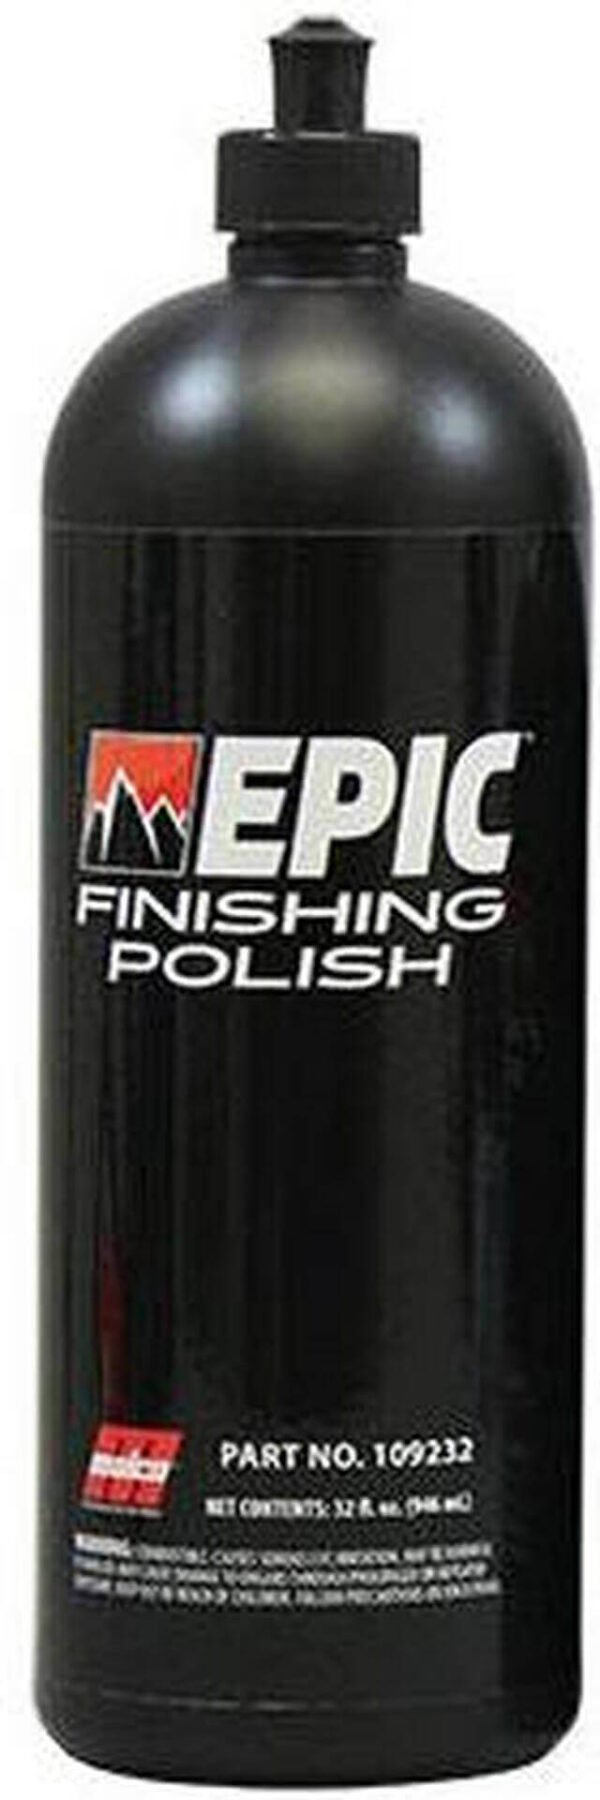 epic-finish-polish-1